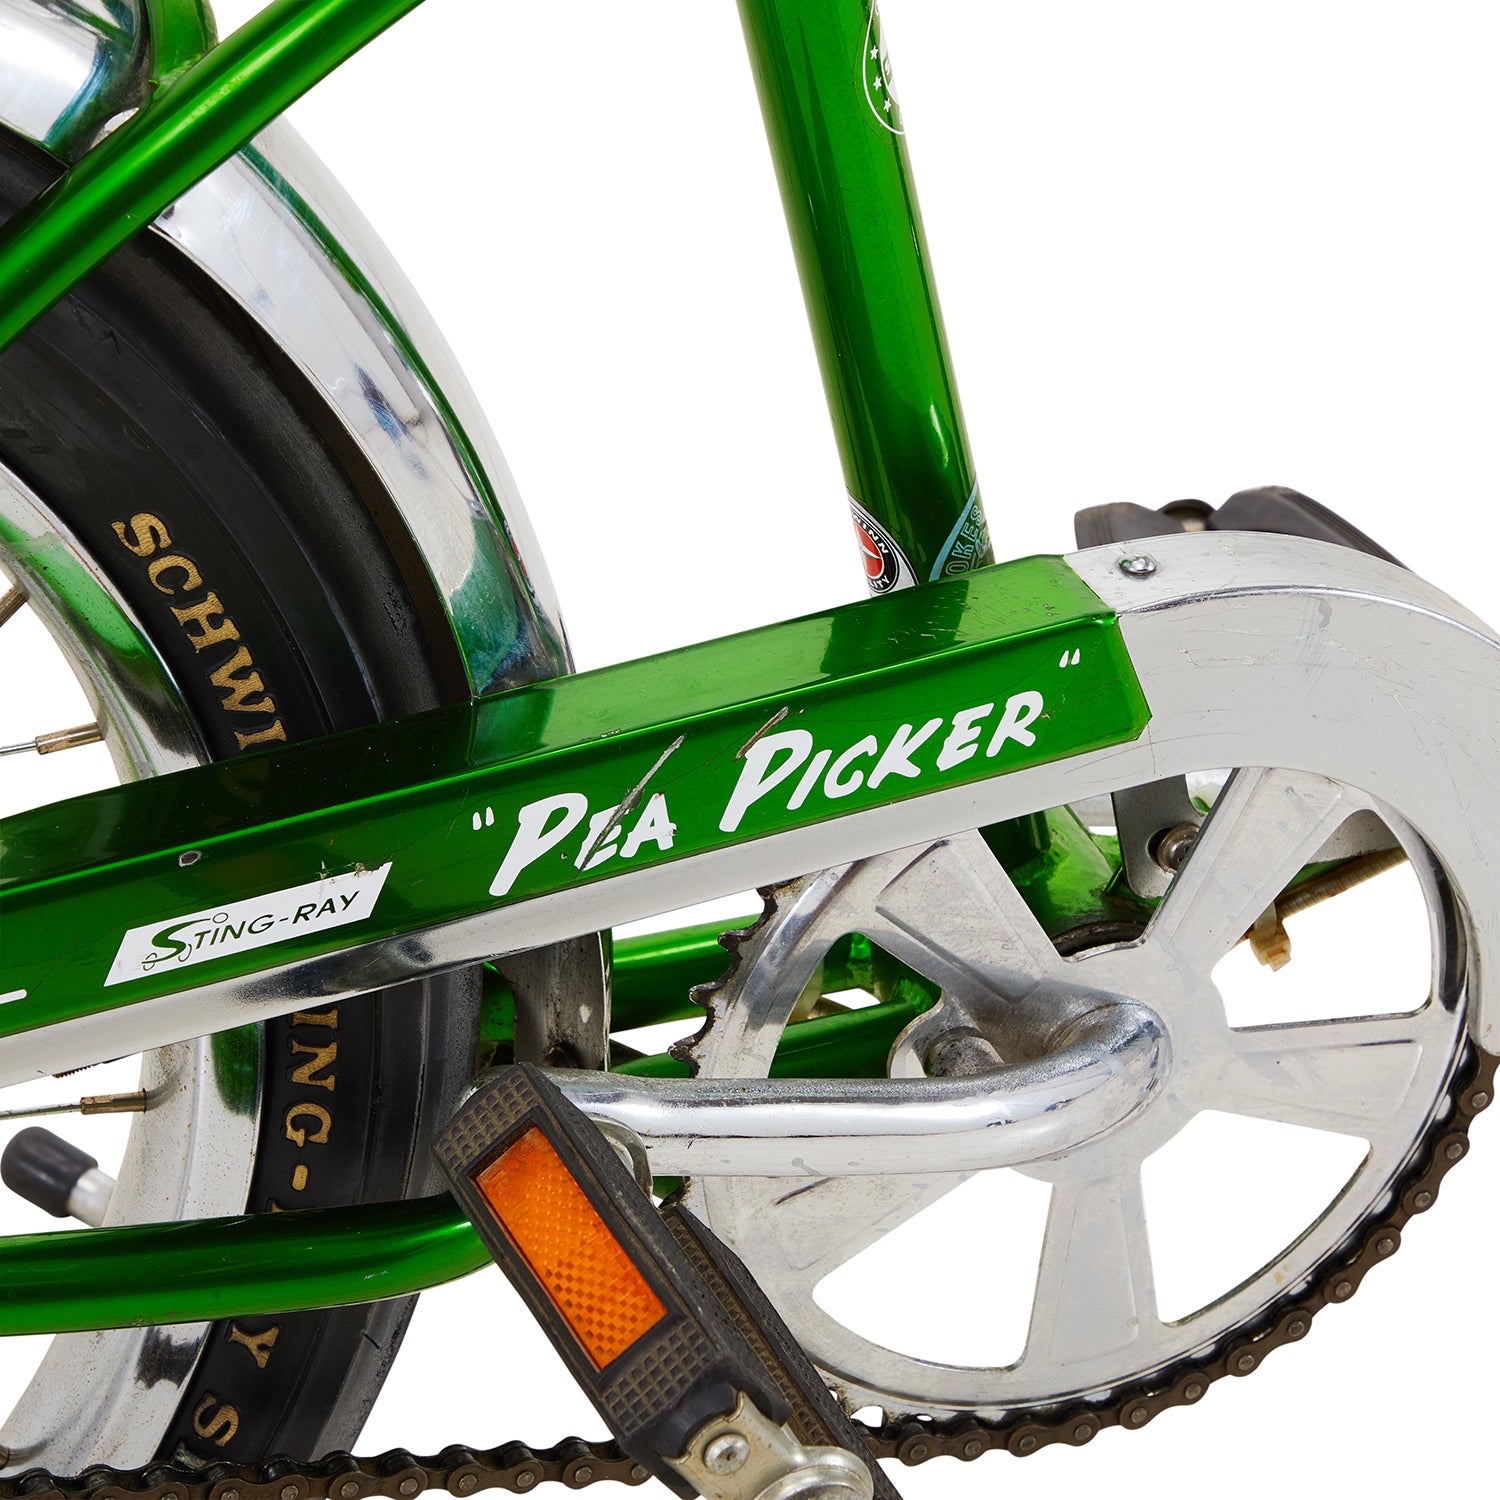 pea picker bike